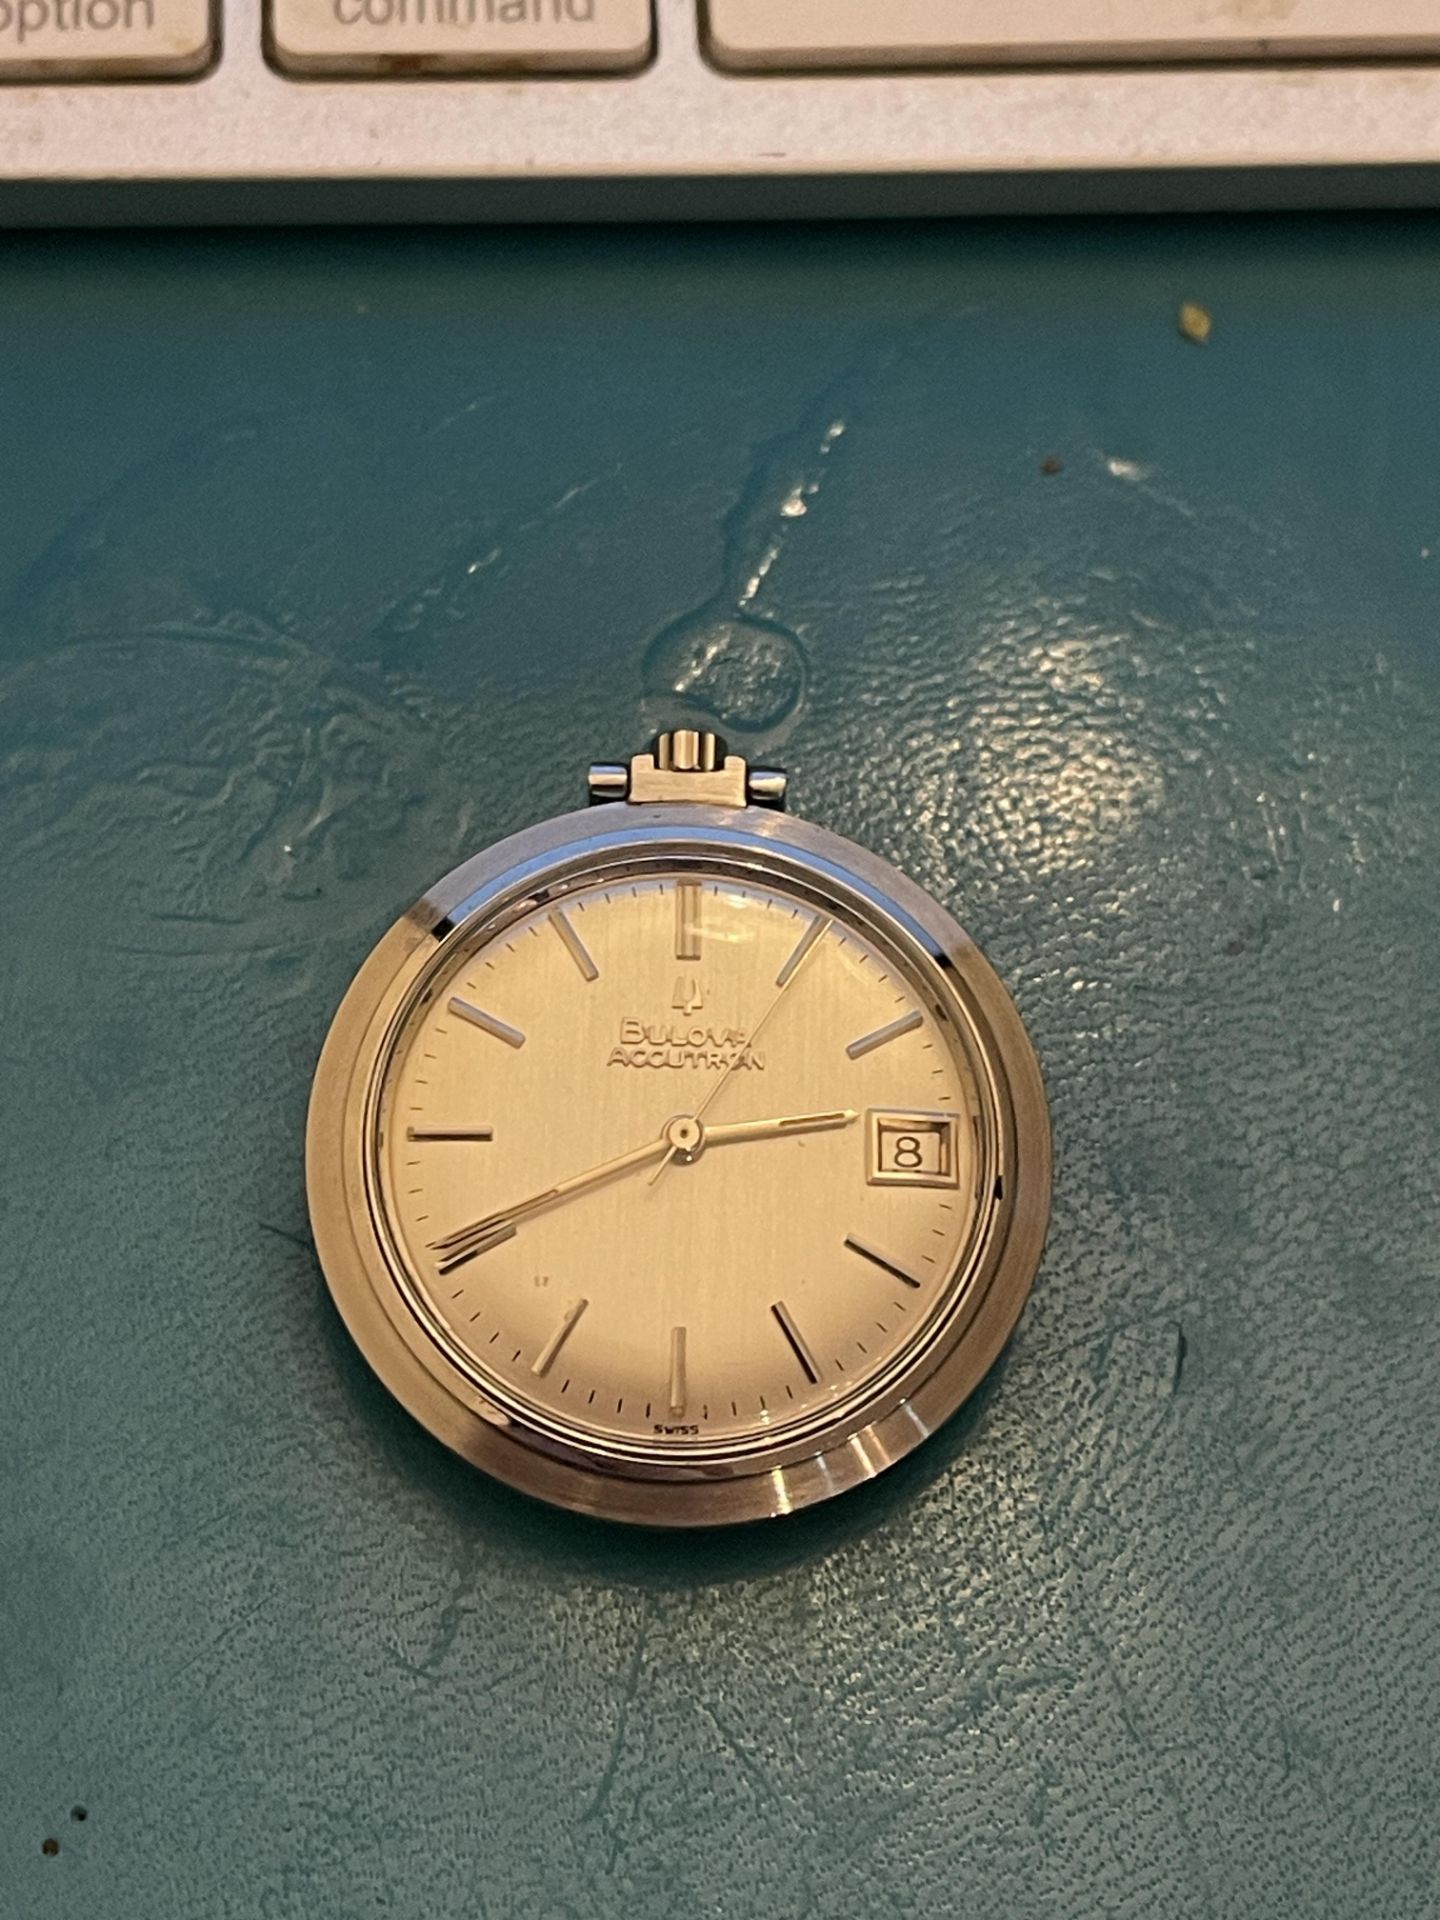 Bulova rare Accrutron men's pocket watch stainless steel - Image 6 of 8